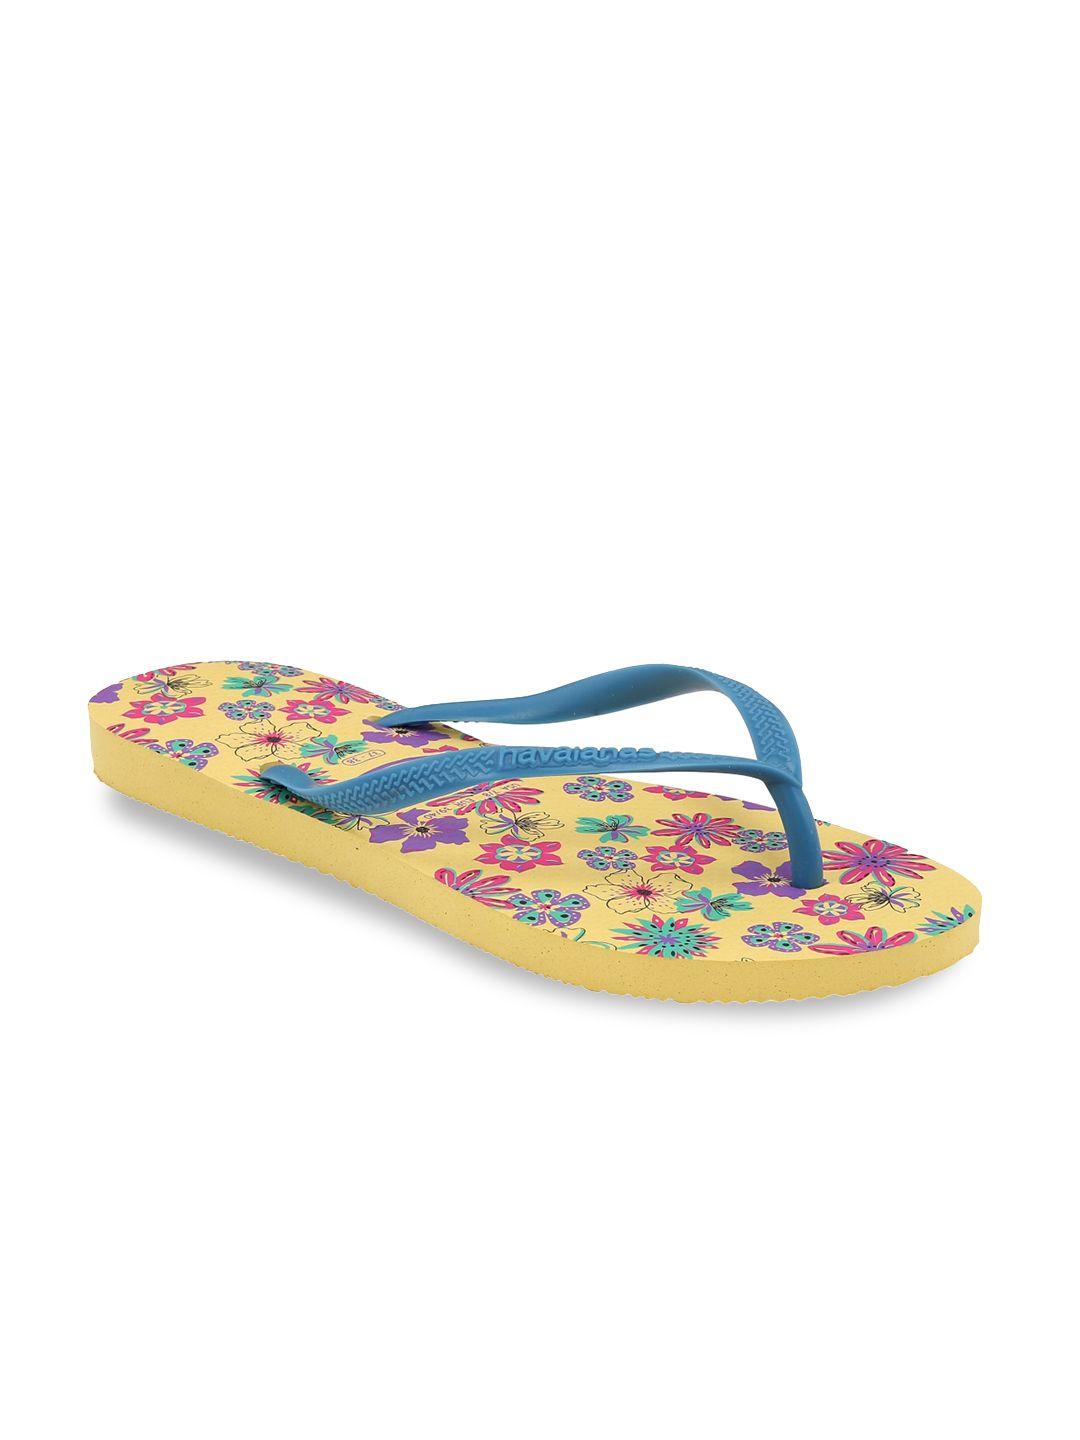 havaianas women yellow & pink printed rubber thong flip-flops